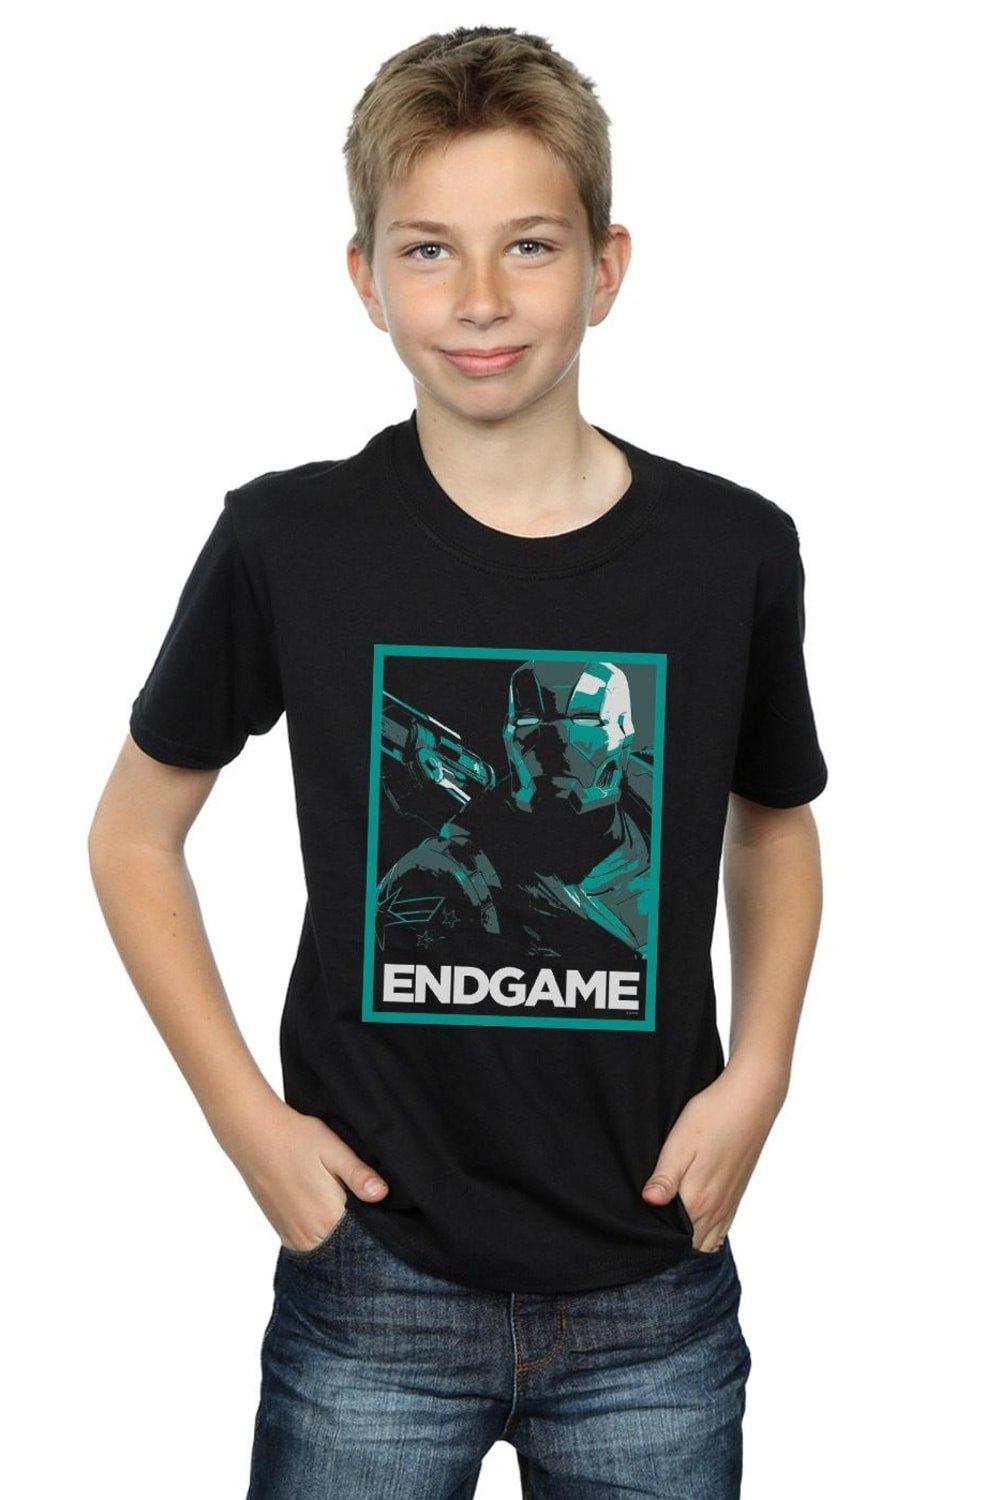 Avengers Endgame War Machine Poster T-Shirt